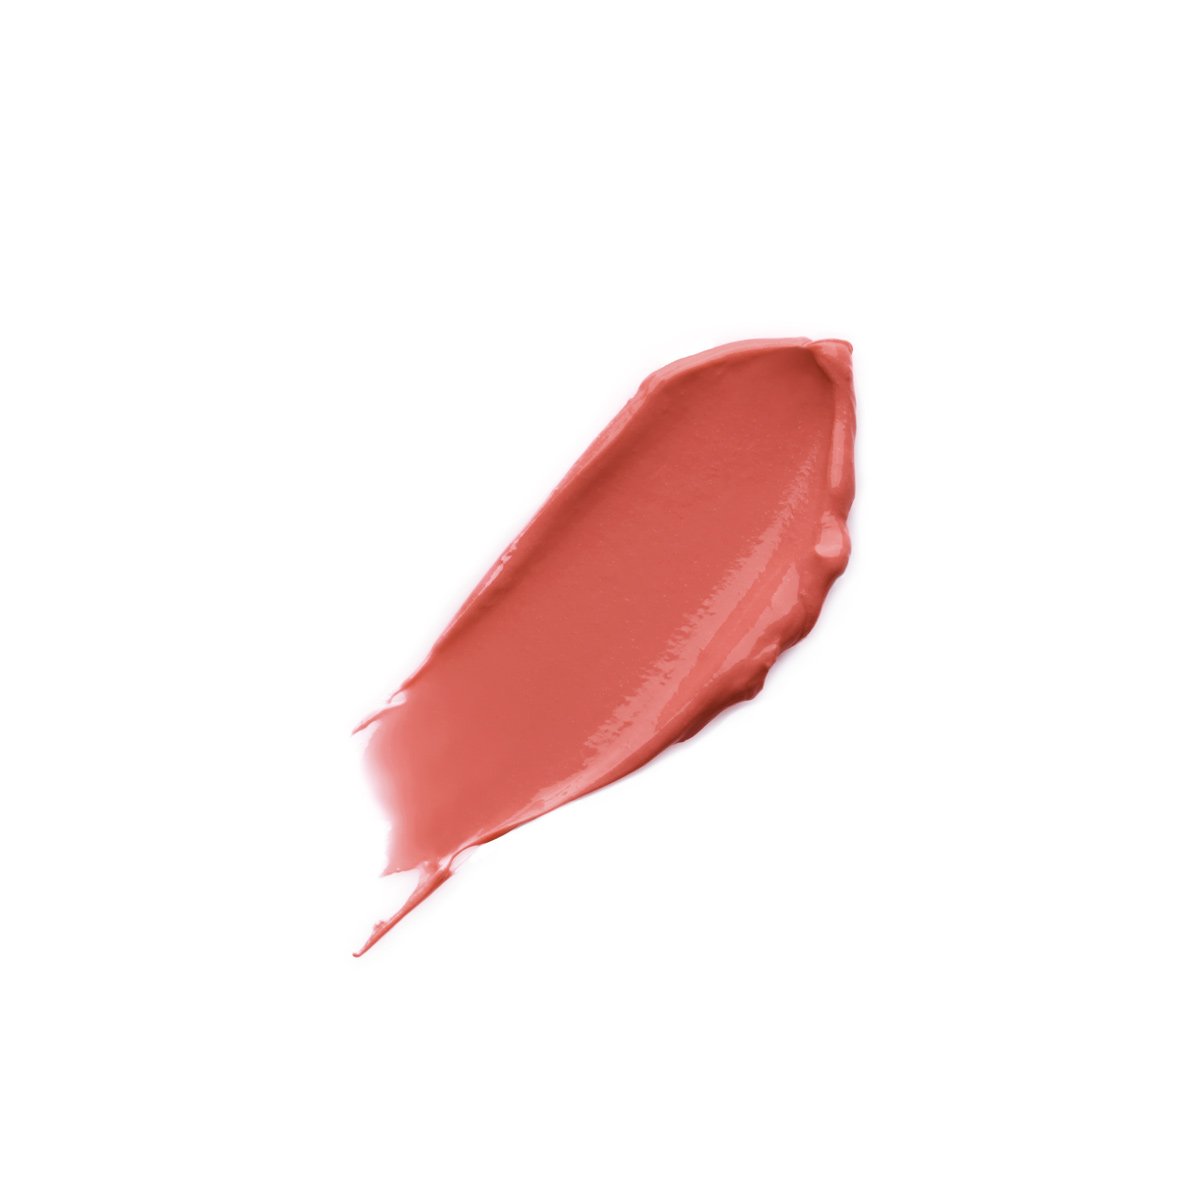 GAMINE - PINK CORAL - pink coral lipstick lip balm